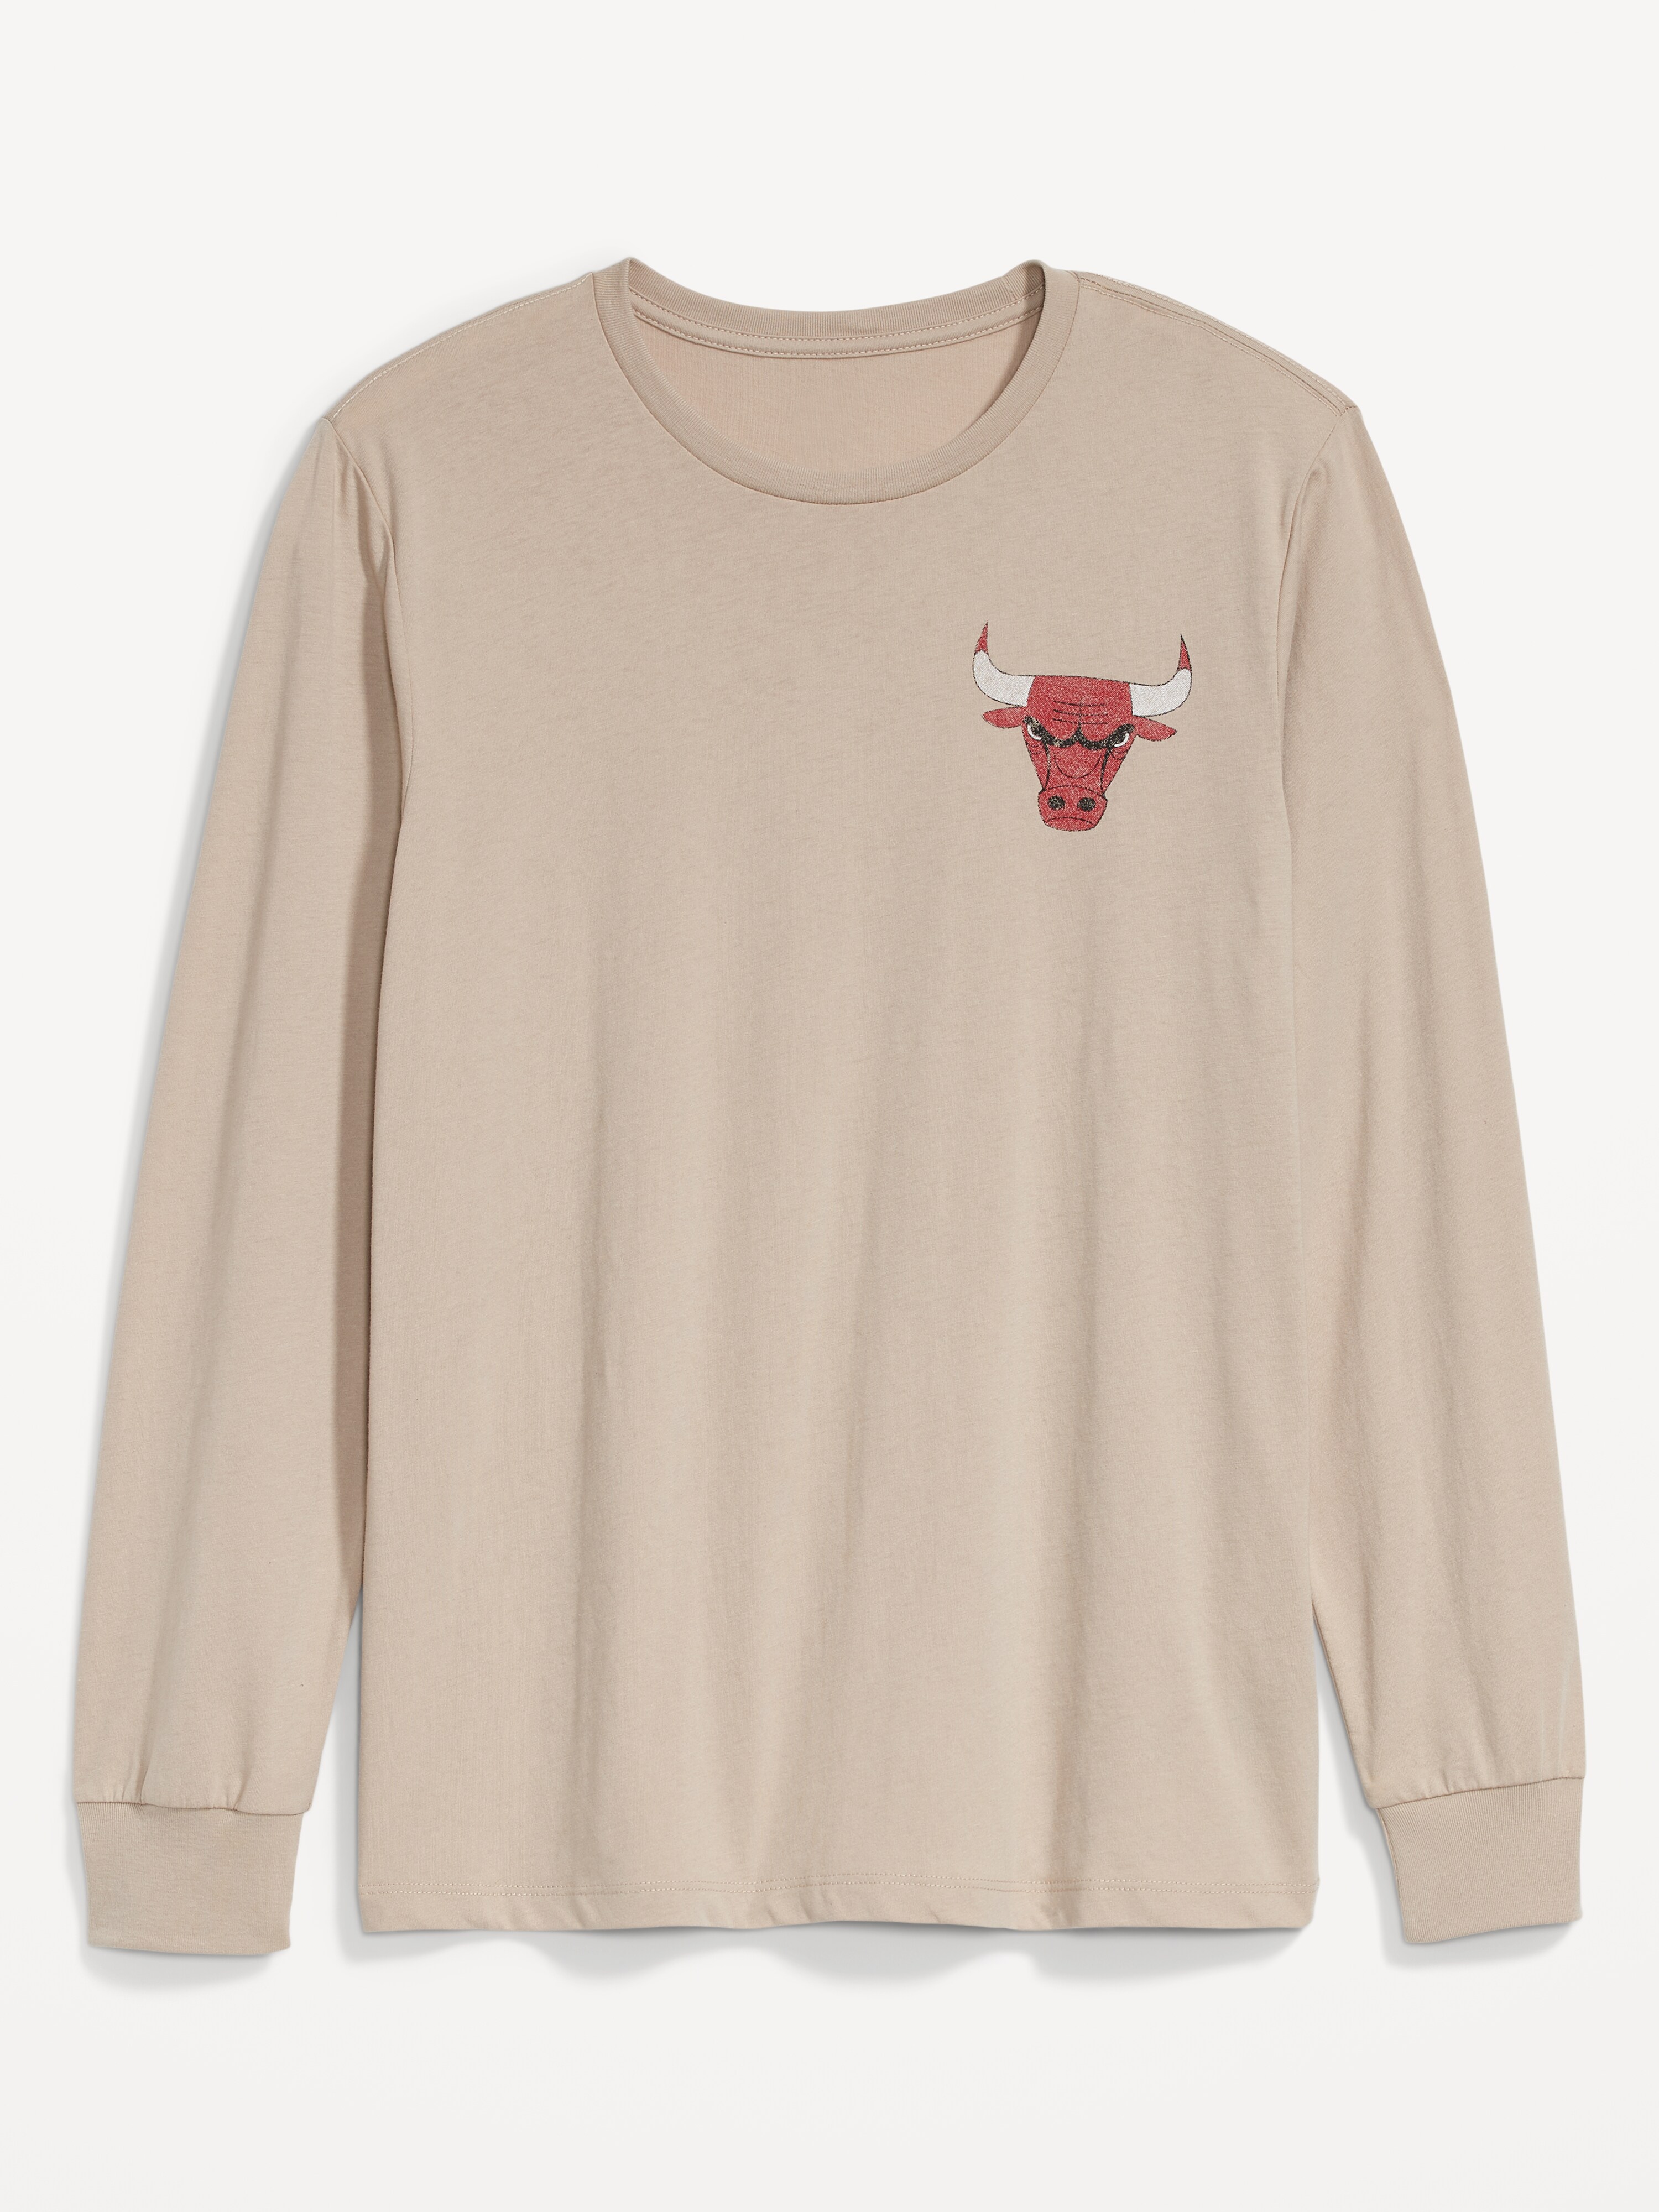 Vintage omkeerbare All Over Print Chicago Bulls Jersey L Kleding Gender-neutrale kleding volwassenen Tops & T-shirts Tanktops 